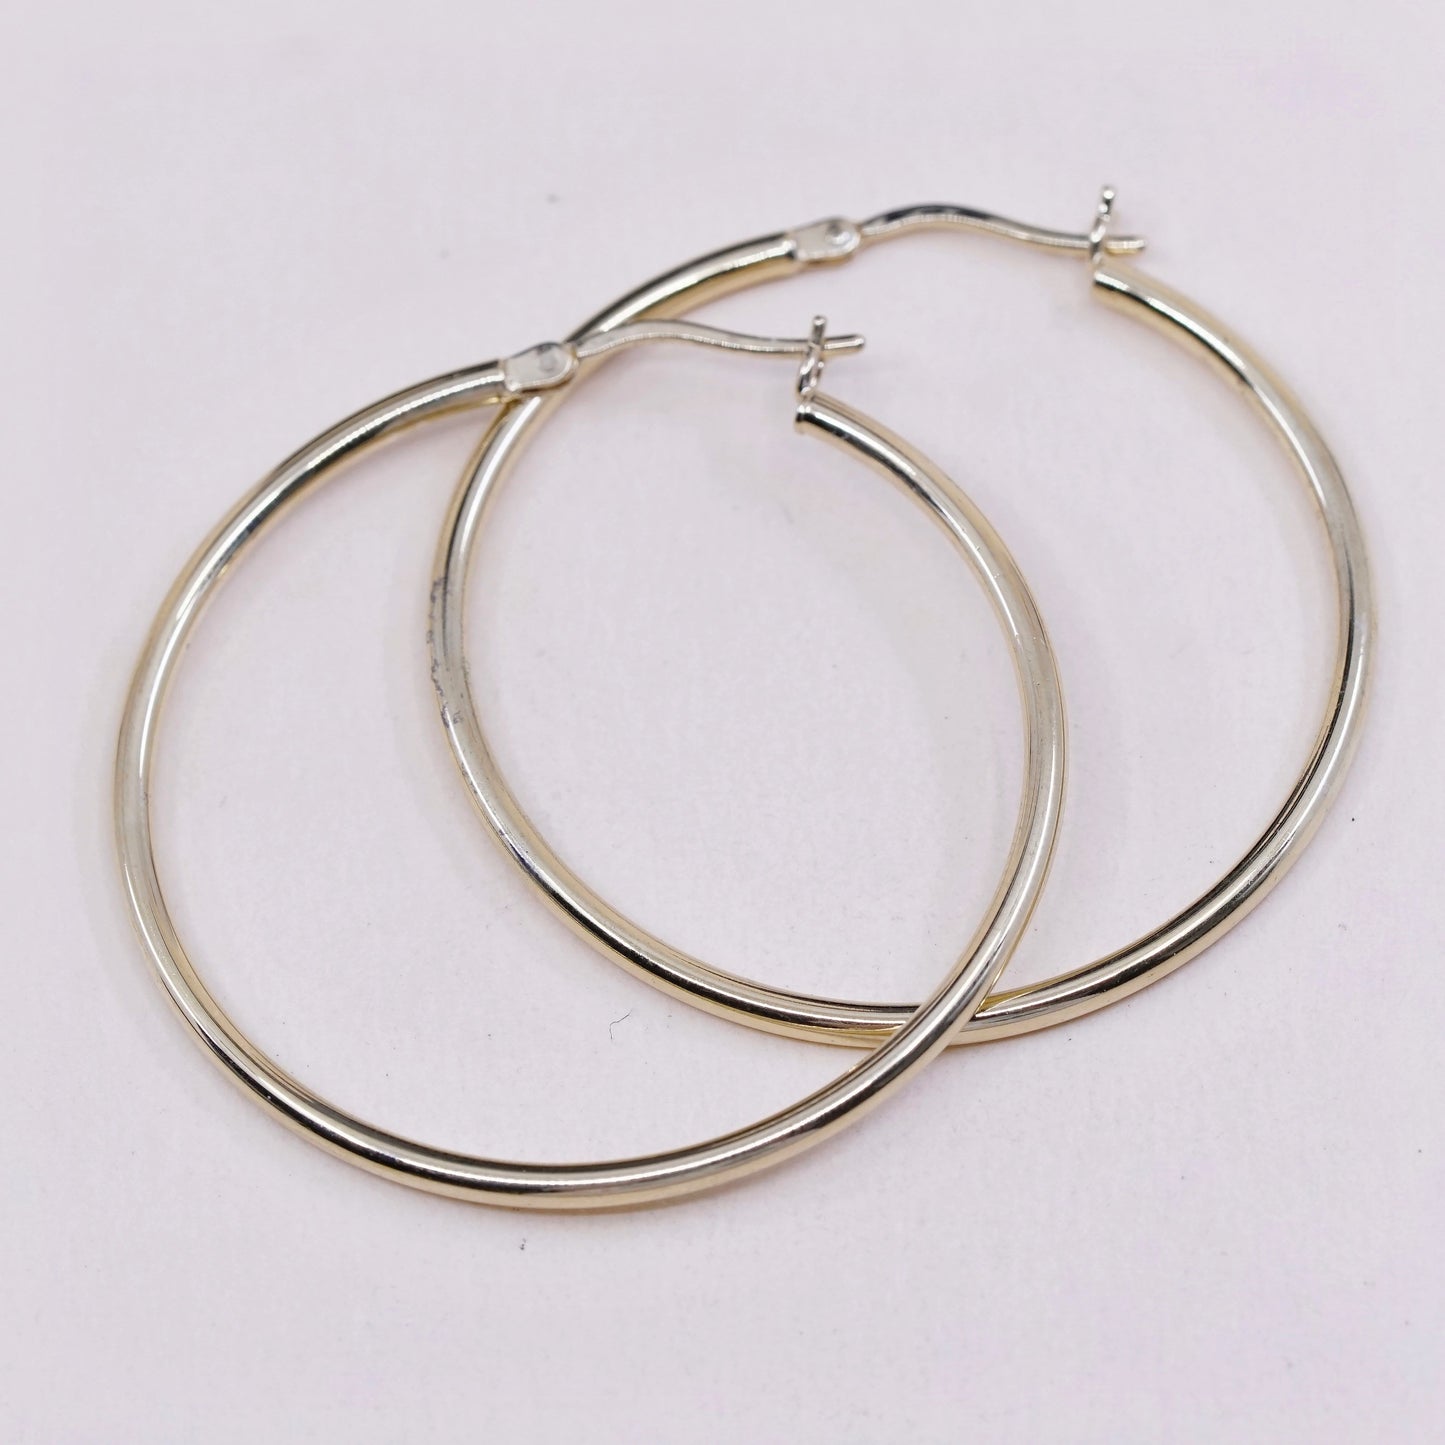 1.75” vtg vermeil gold over sterling silver earrings, minimalist hoops